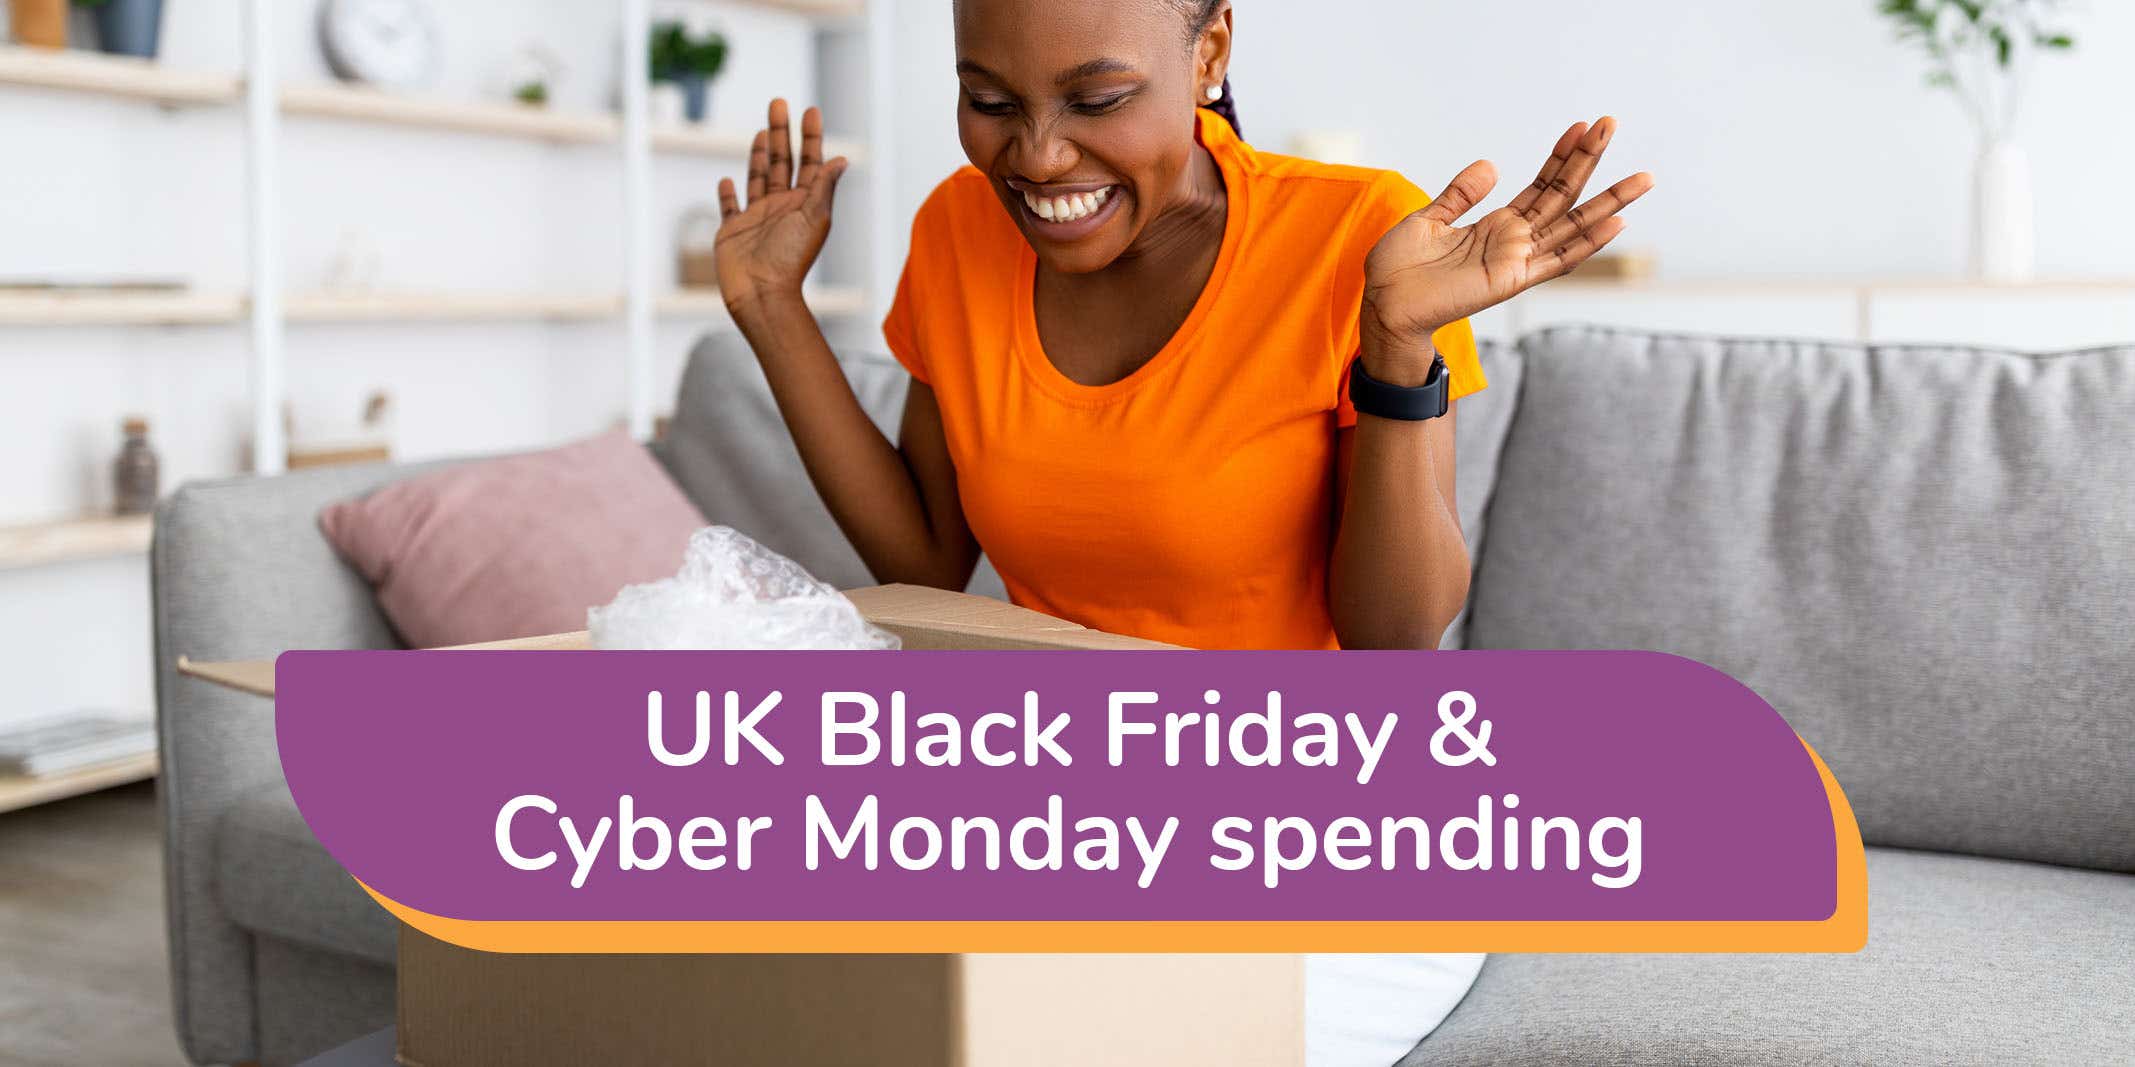 UK Flack Friday & Cyber Monday spending